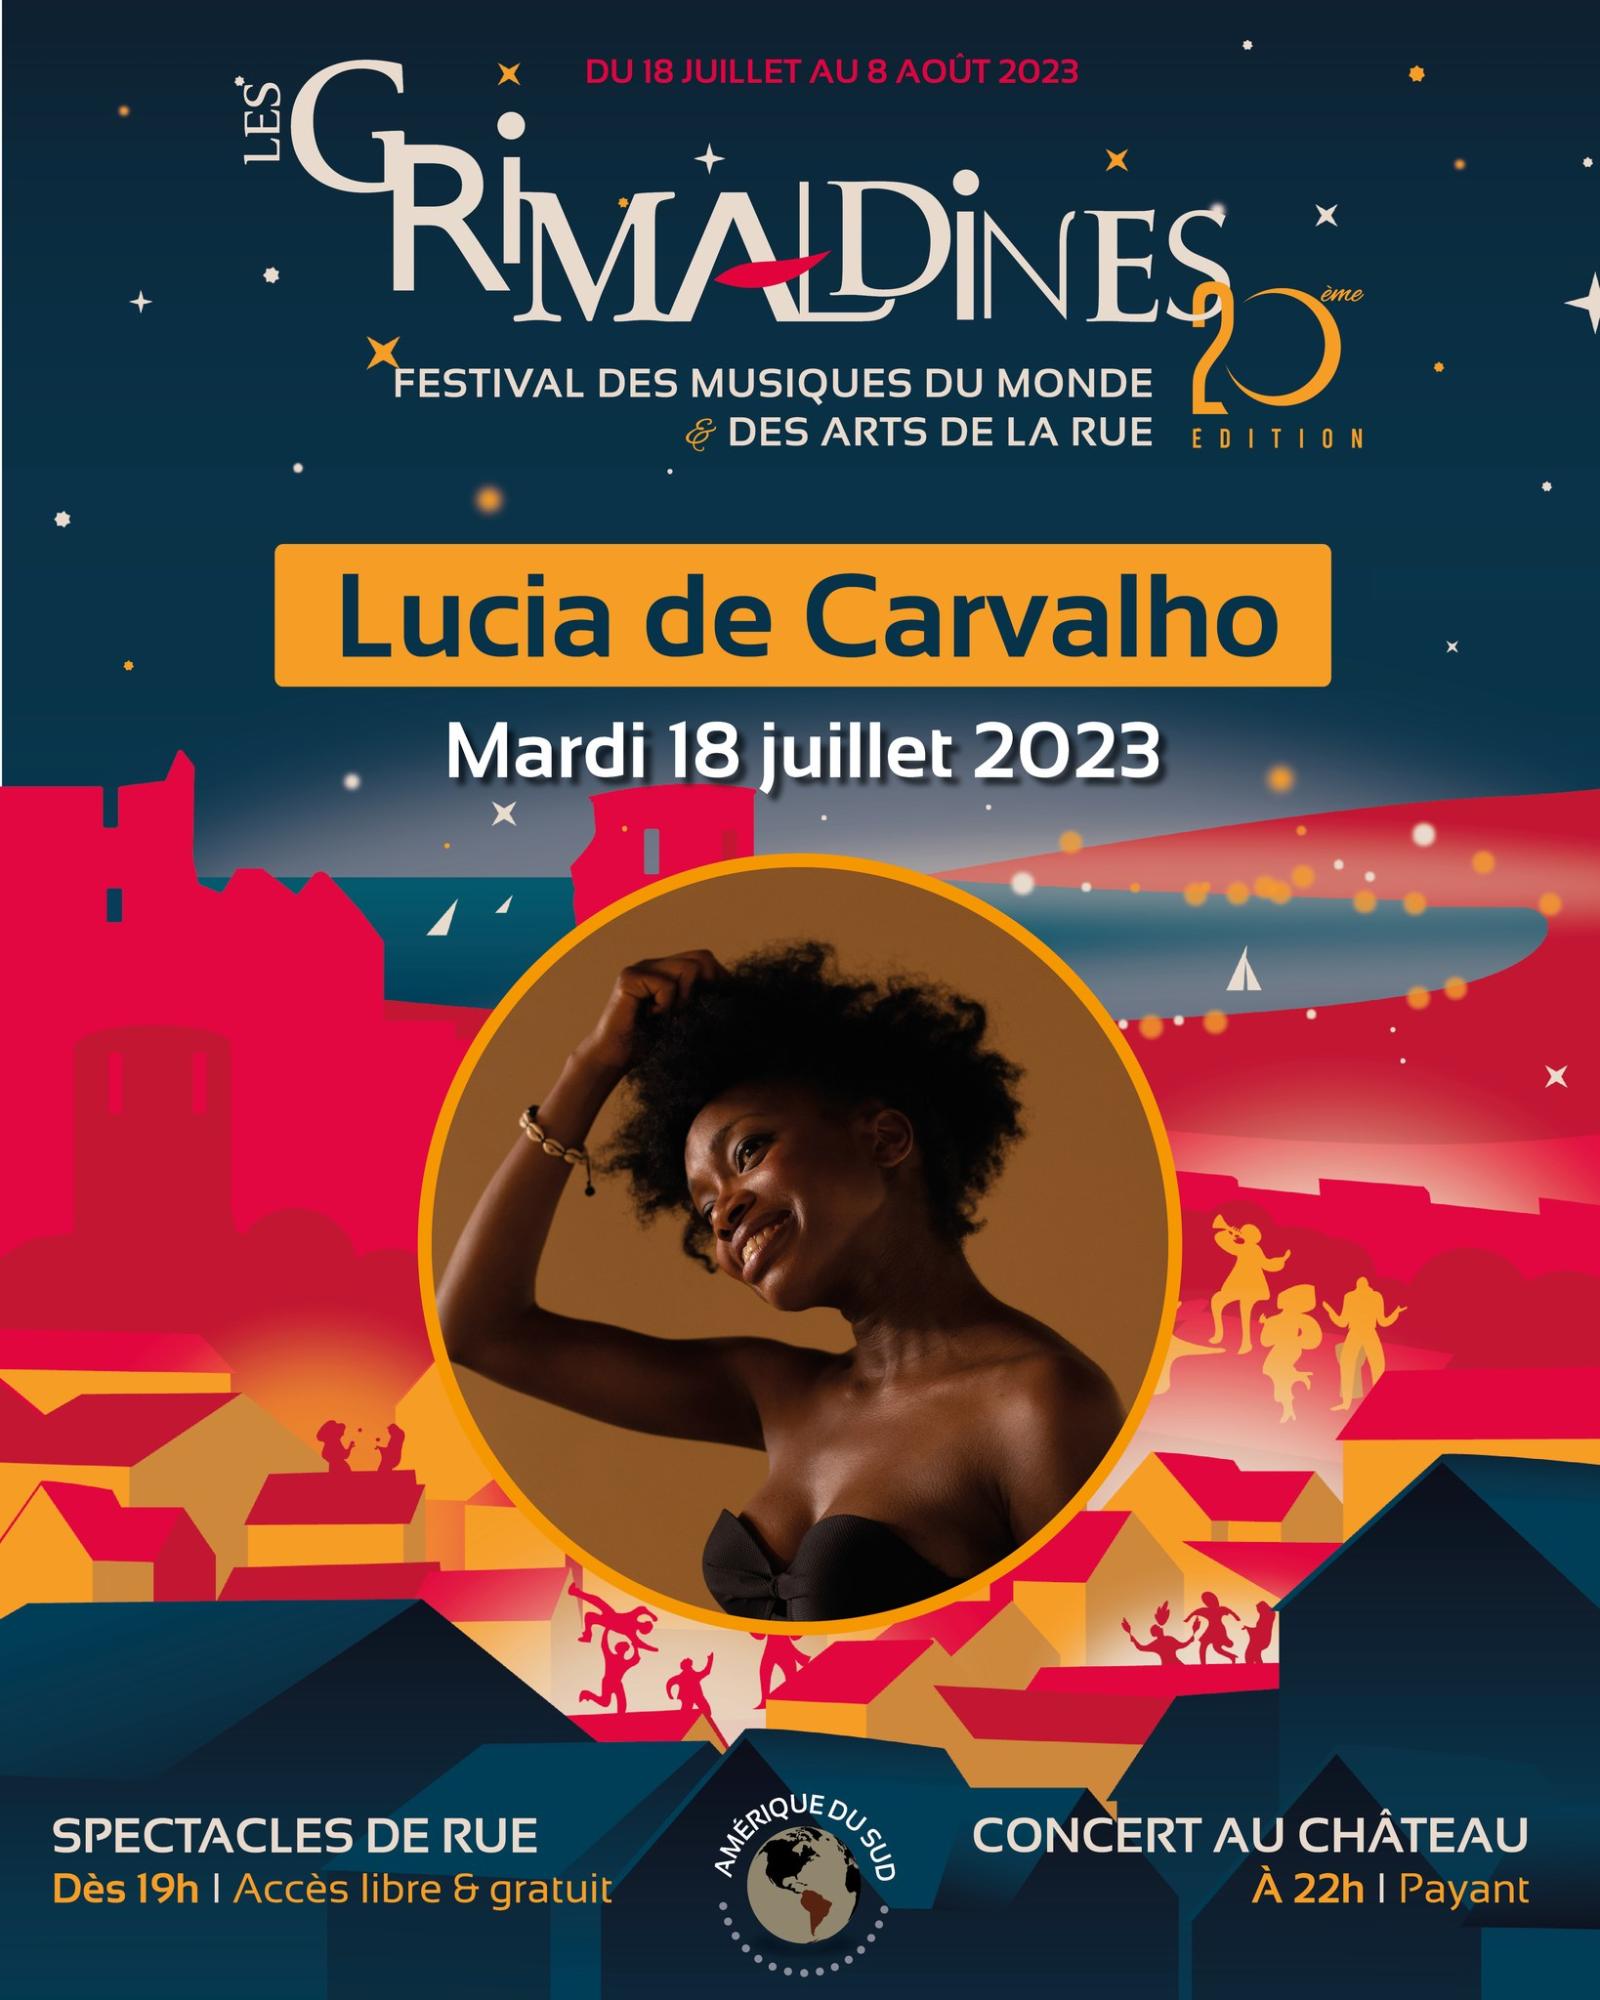 Mardi 18 juillet 2023 - Les Grimaldines avec Lucia de Carvalho